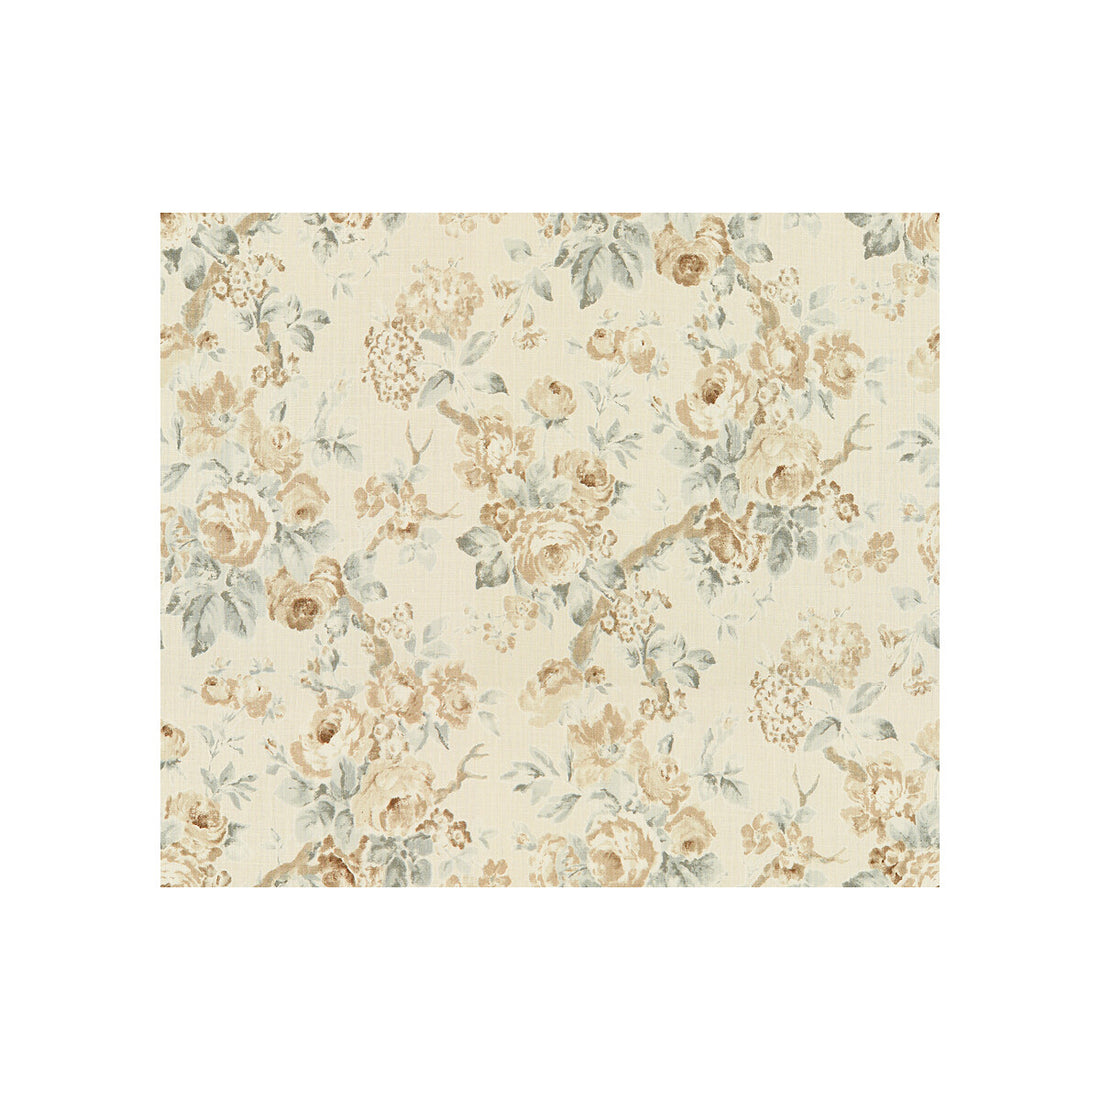 Garden Roses fabric in beige/aqua color - pattern 2007157.613.0 - by Lee Jofa in the Suzanne Rheinstein *Hollyhock II collection